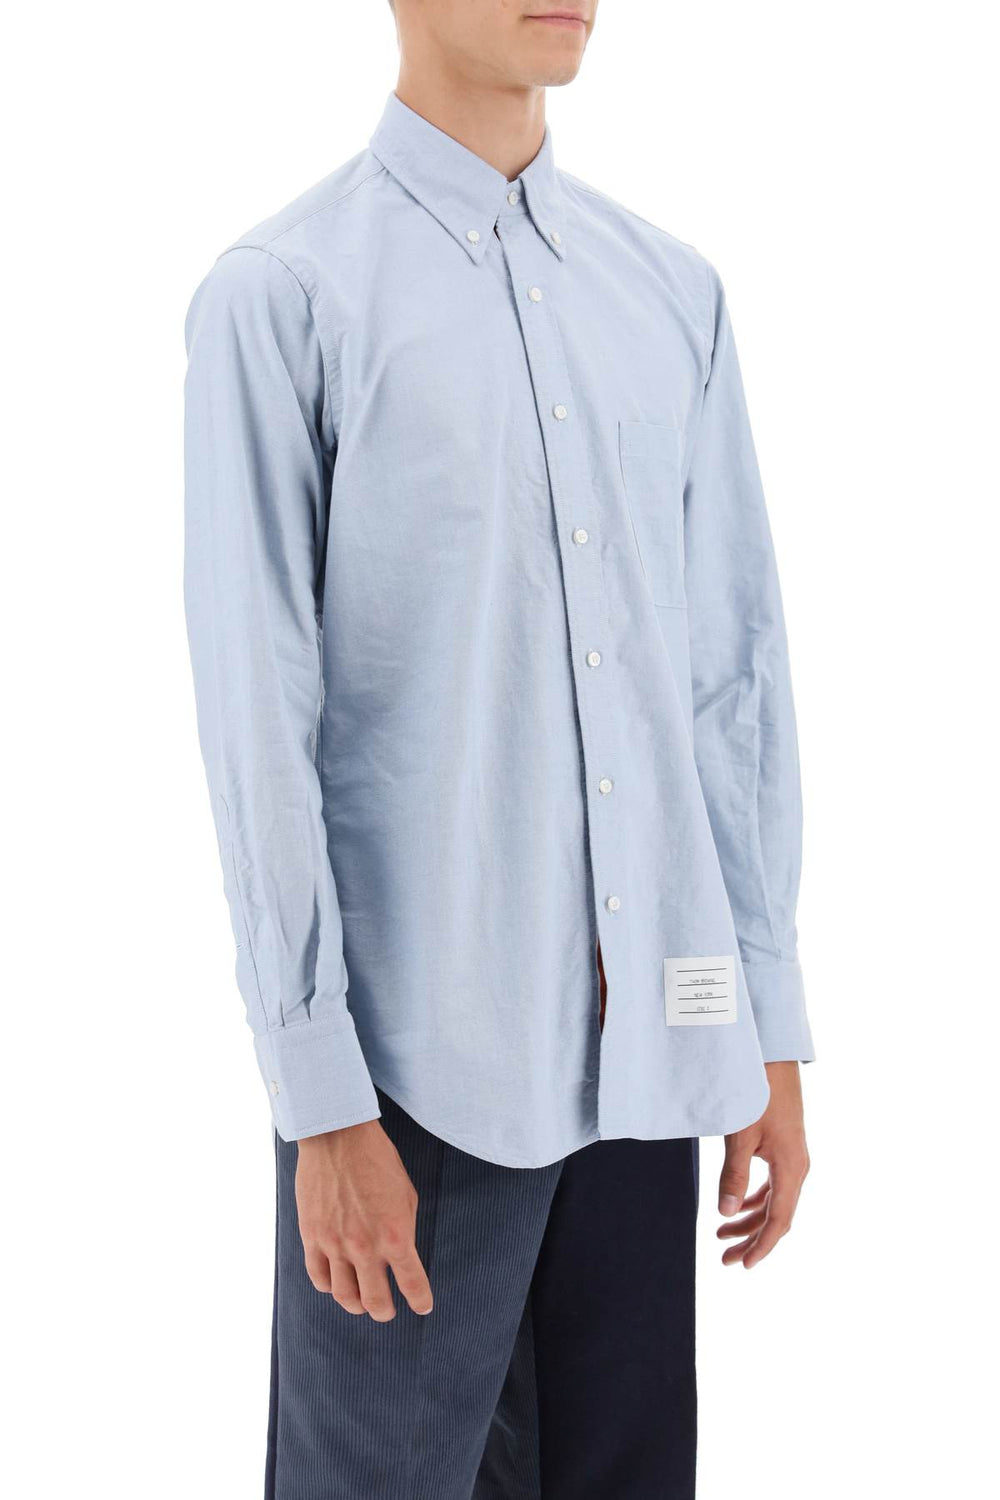 Thom browne oxford cotton button-down shirt-1